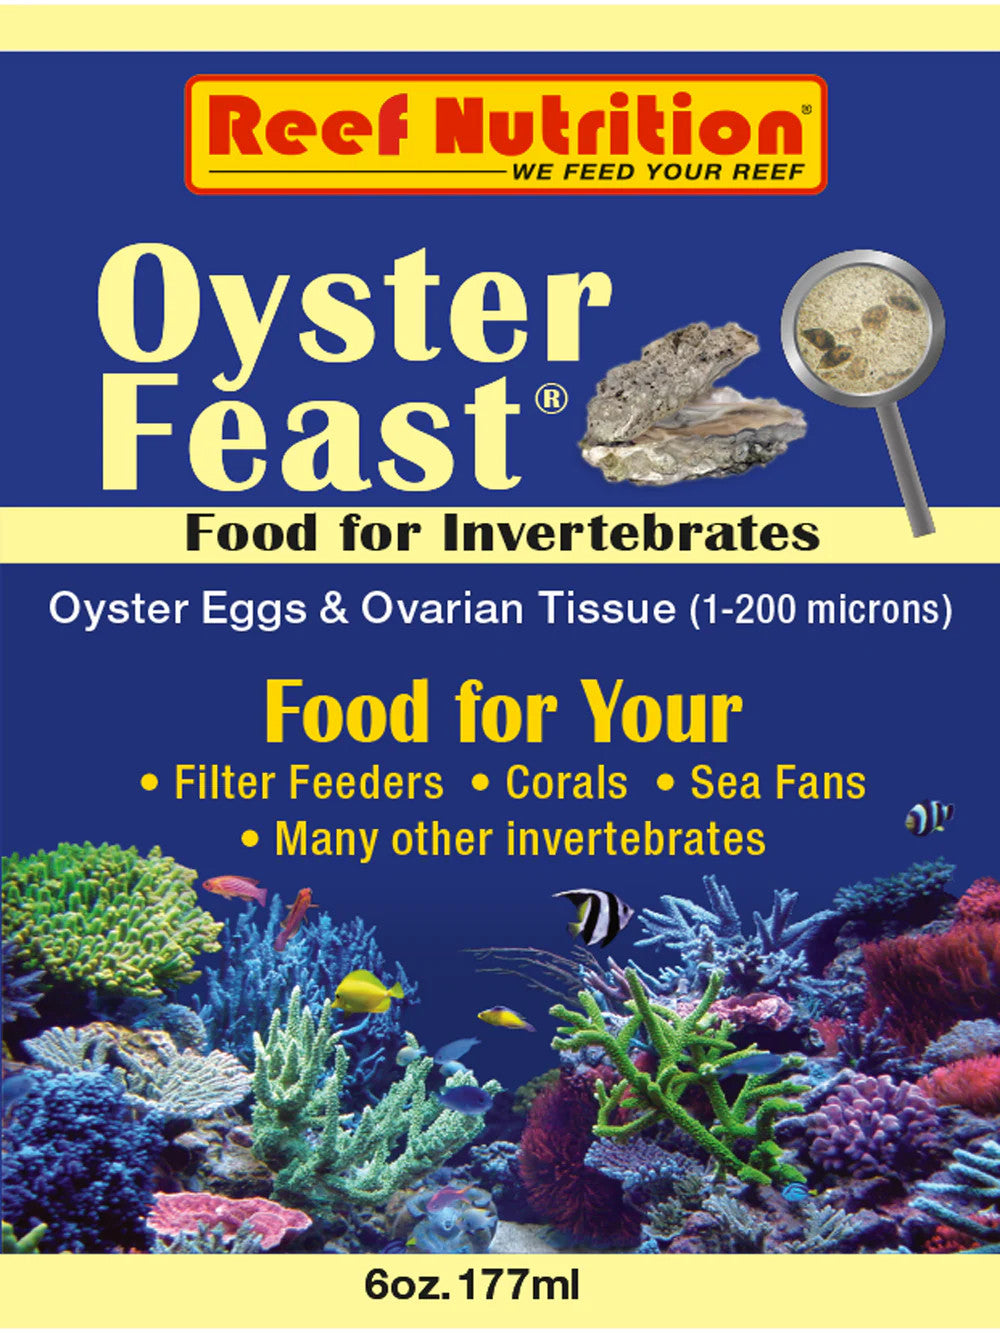 Reef Nutrition Oyster-Feast for sale | Splashy Fish